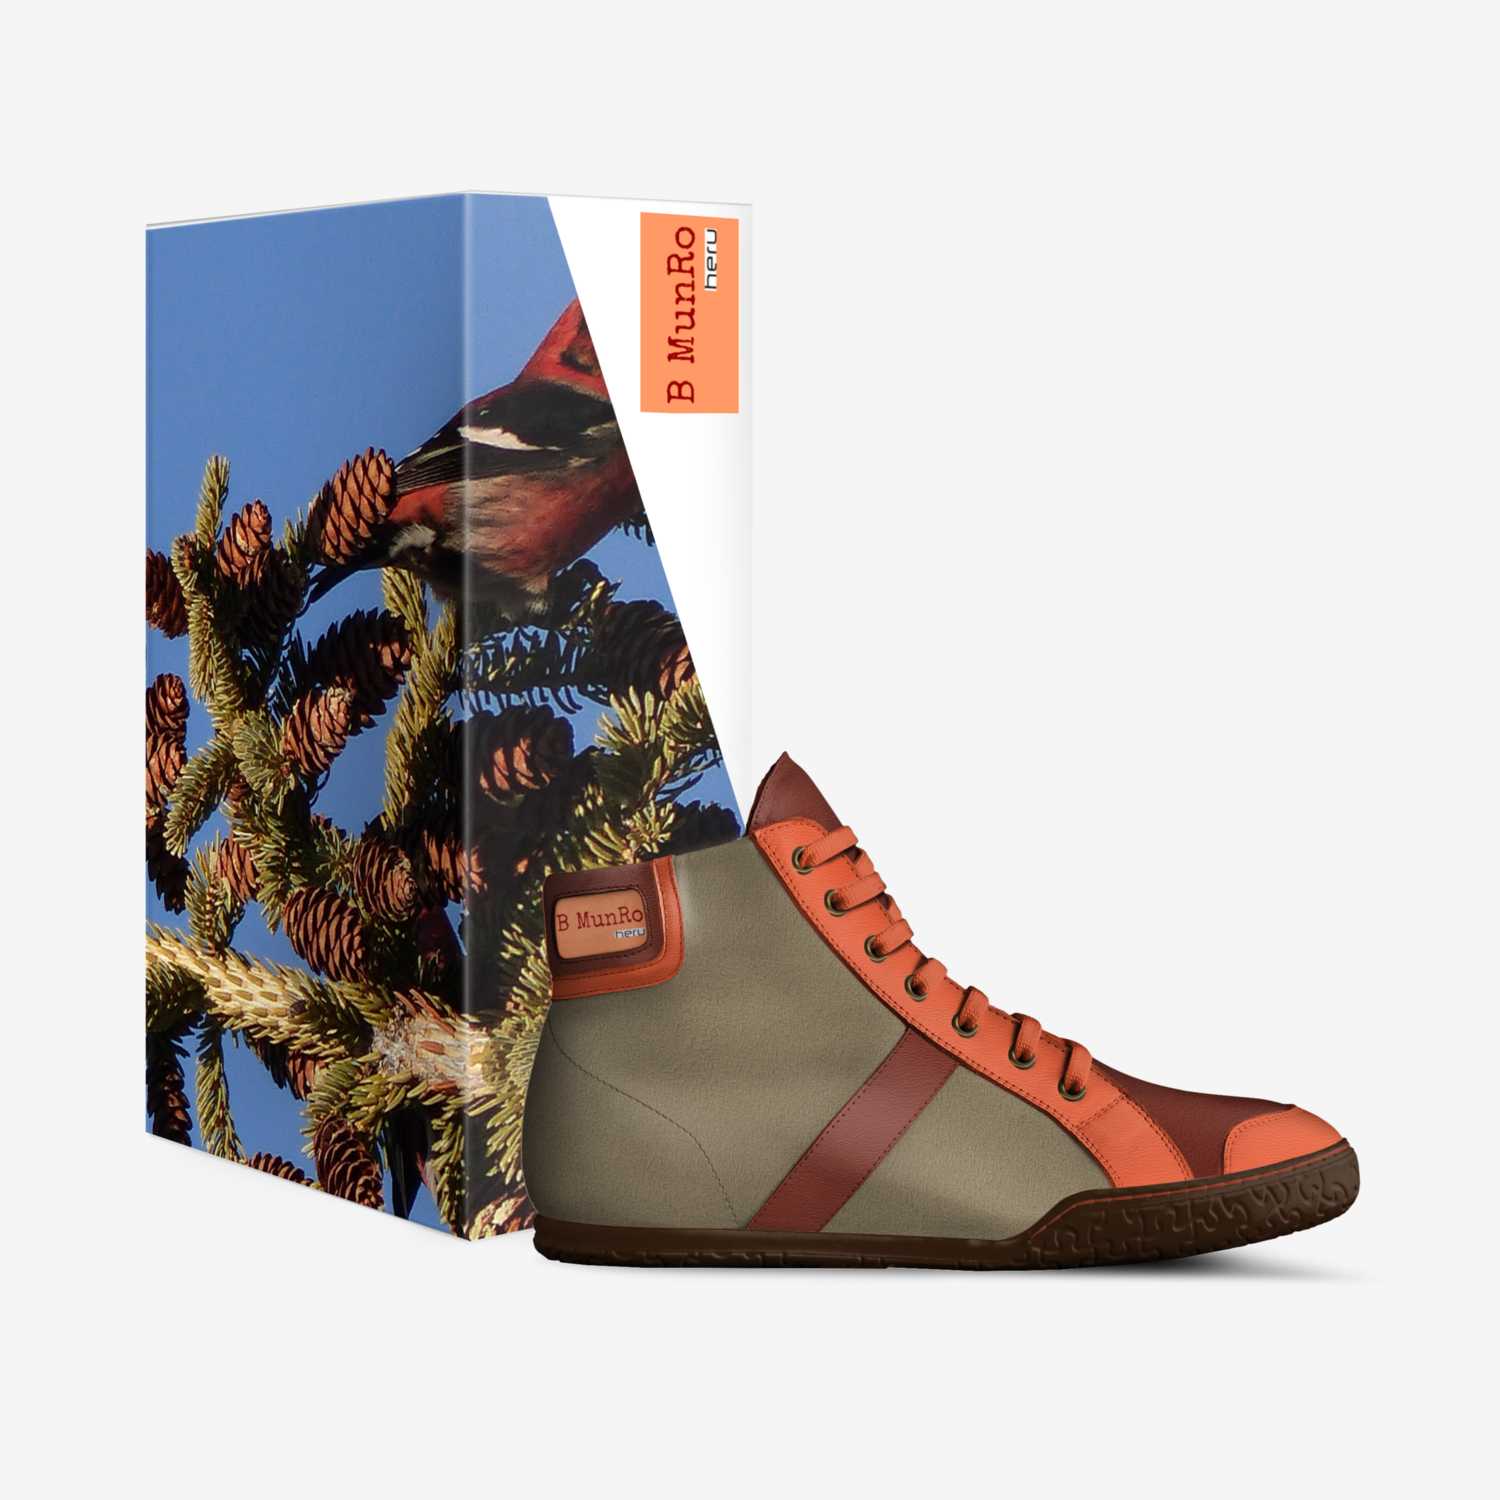 B Munro custom made in Italy shoes by Brooklynne Munro | Box view